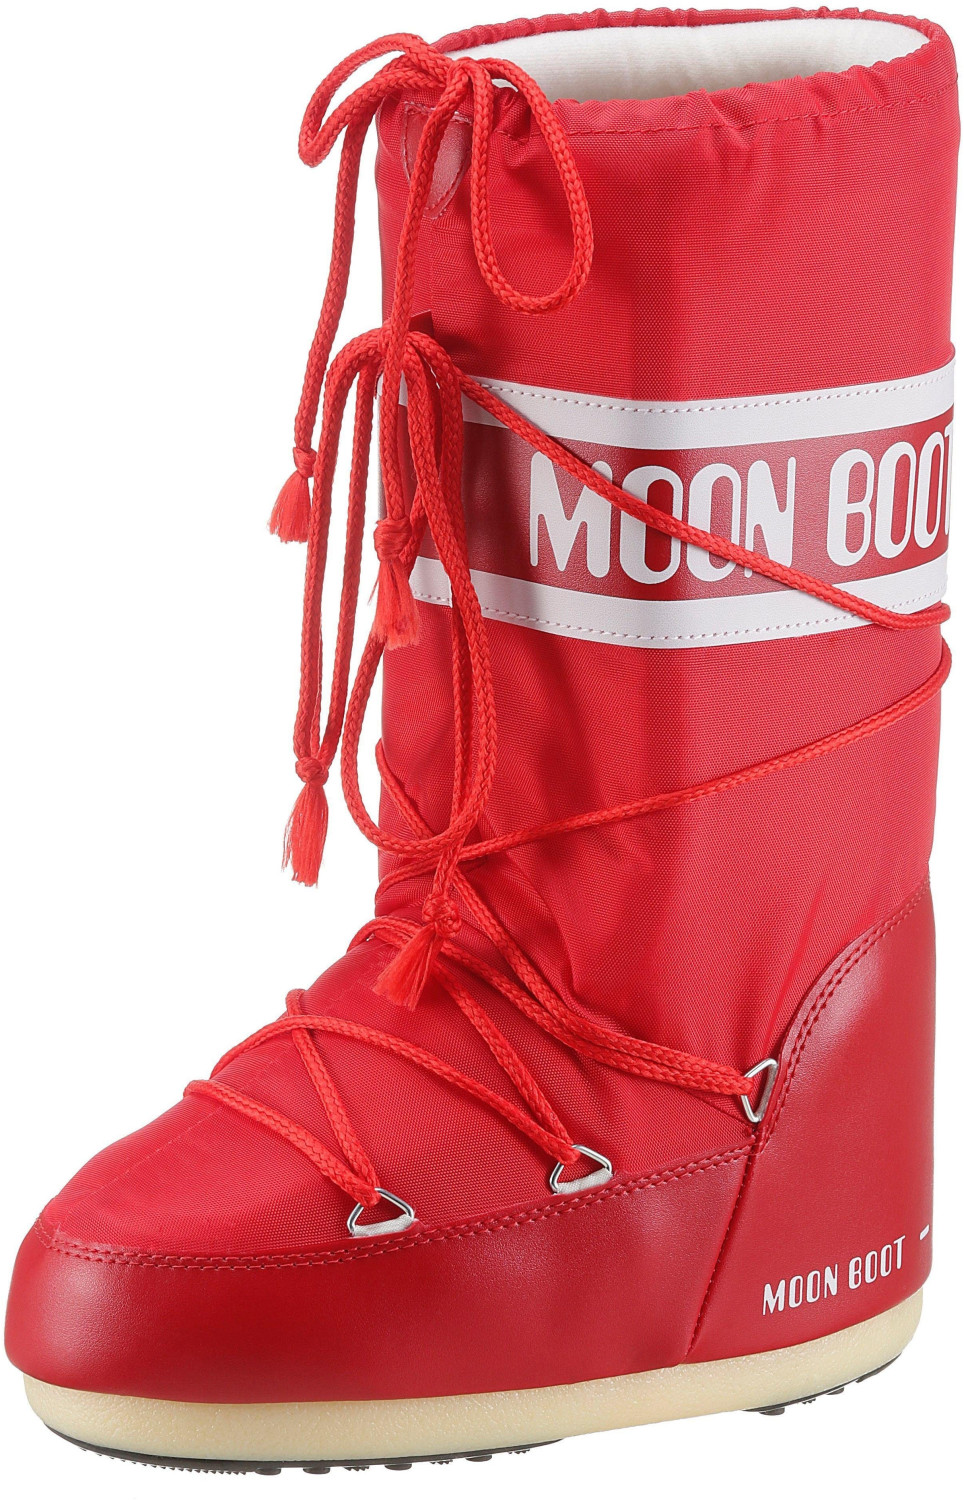 Moon Boot Nylon Red Ab Preisvergleich Bei Idealo De